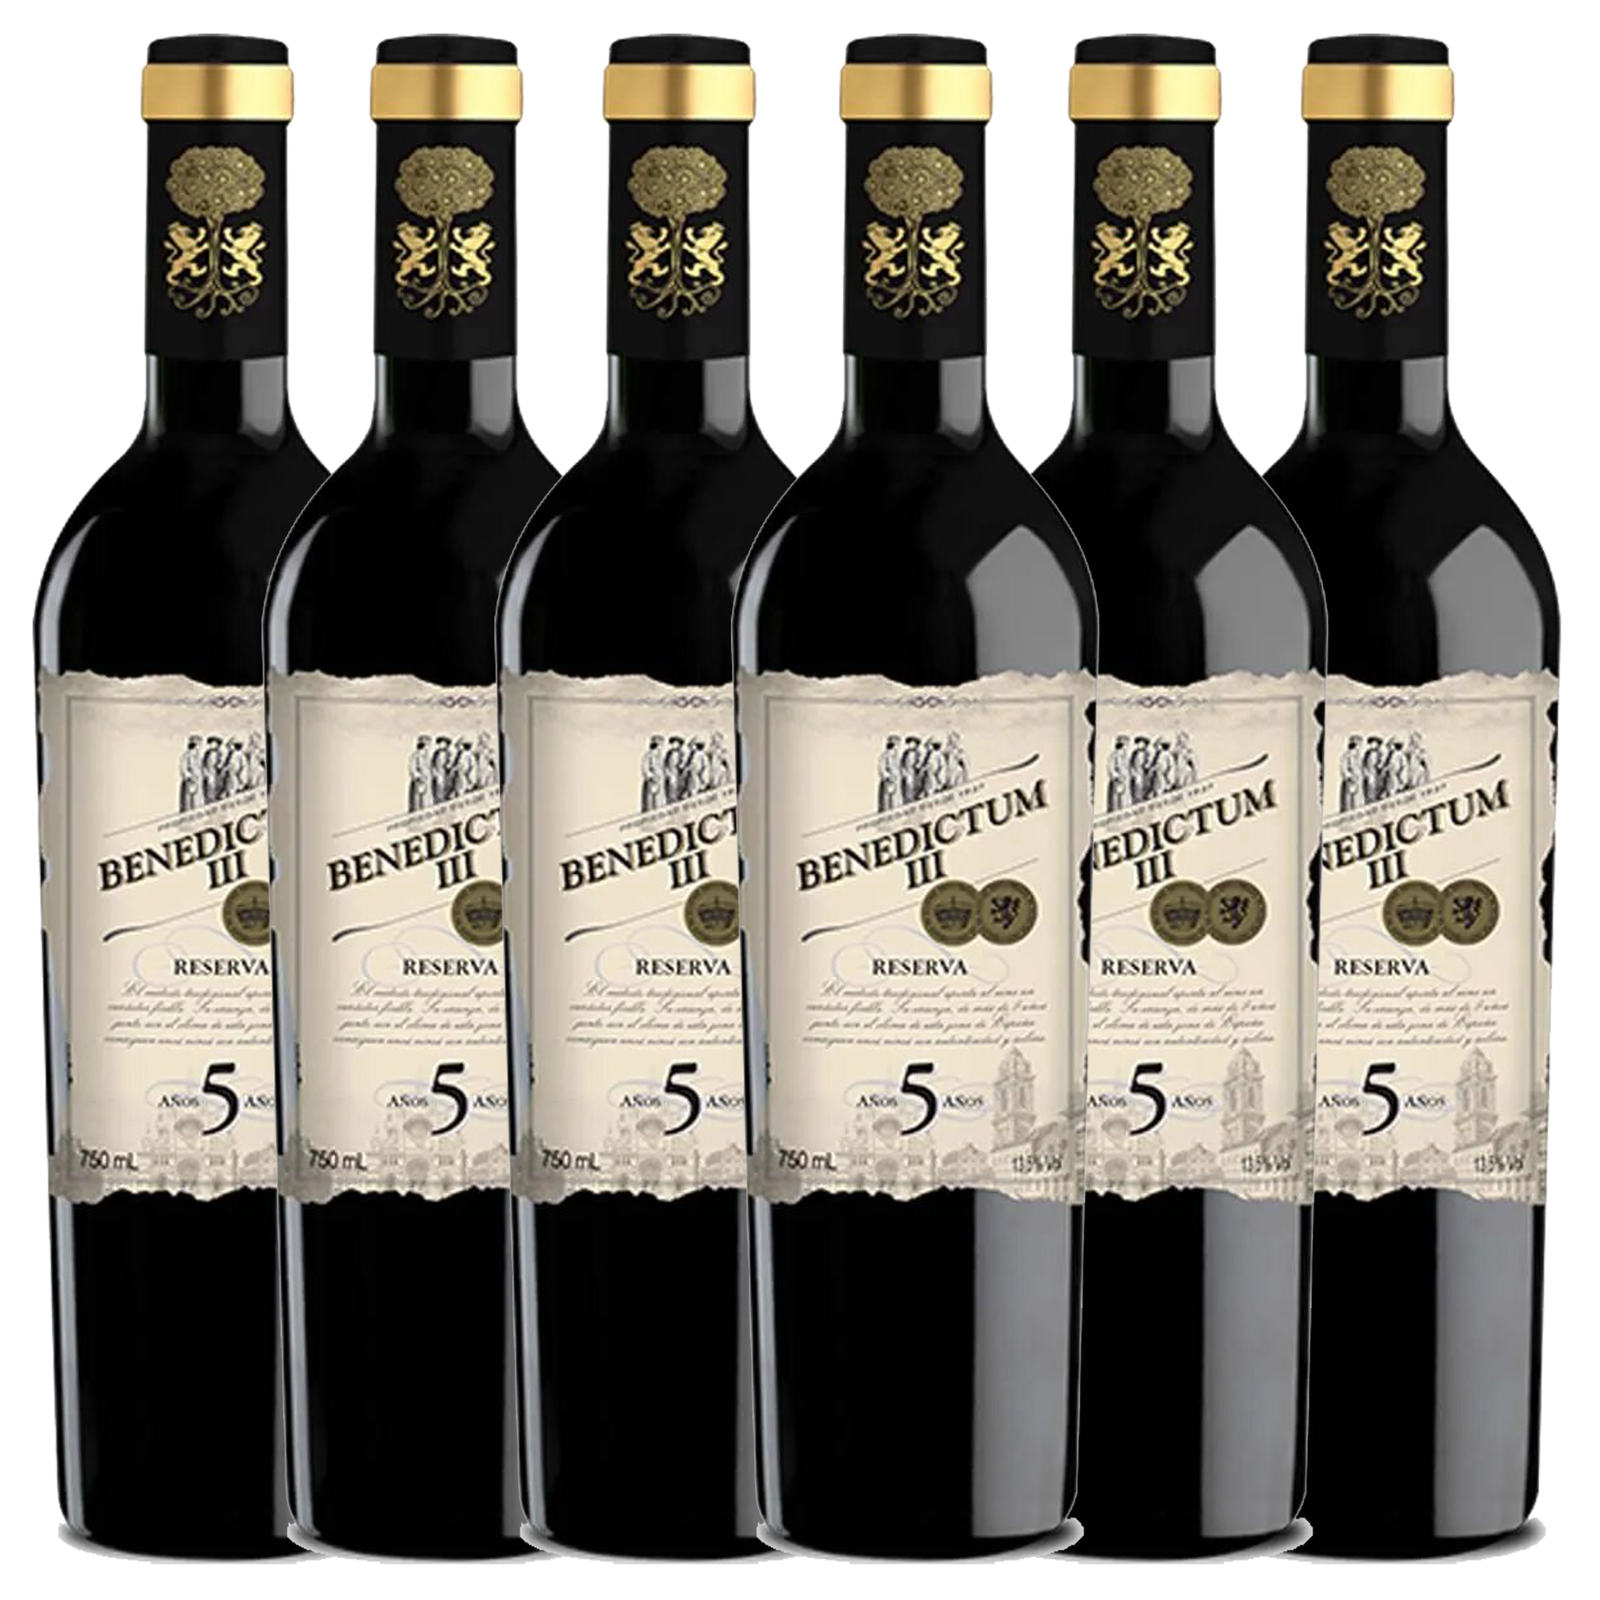 Kit 6x Vinho Tinto Espanhol Benedictum lll Reserva 5 Anos 2013 750ml